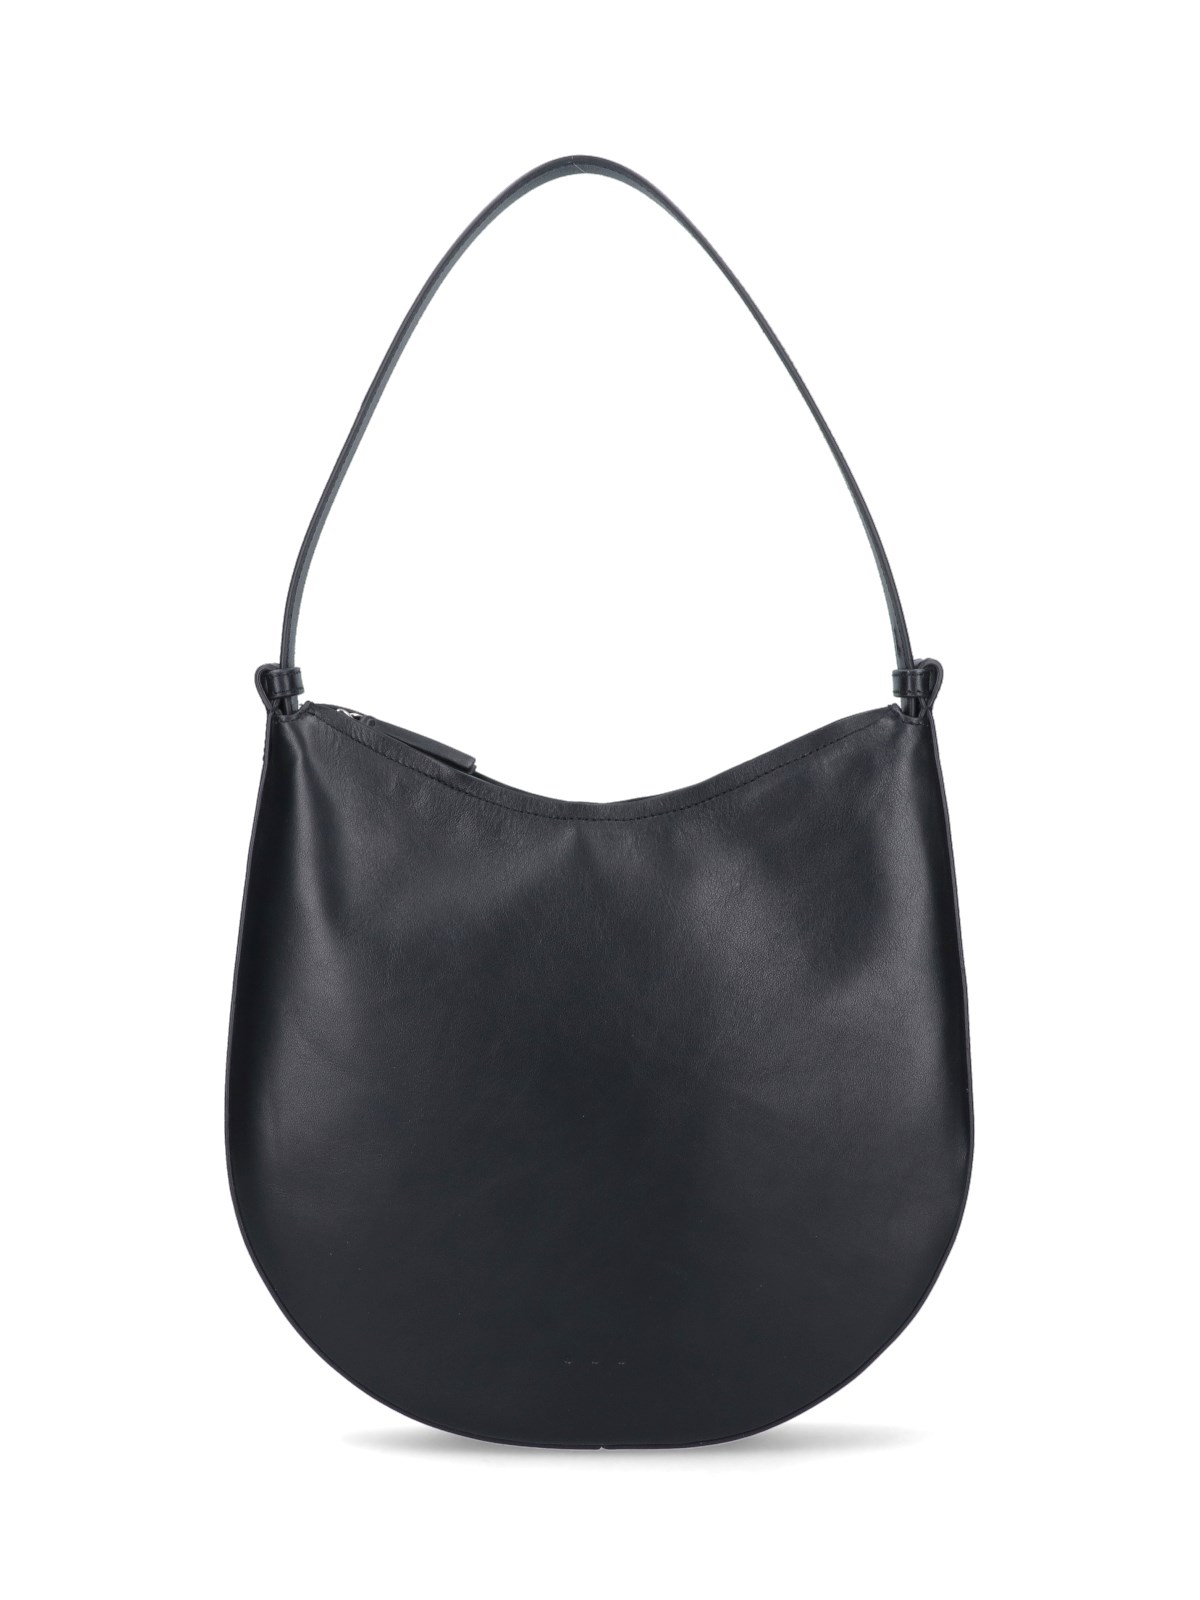 Aesther ekme 'soft mini hobo' shoulder bag available on SUGAR - 115676